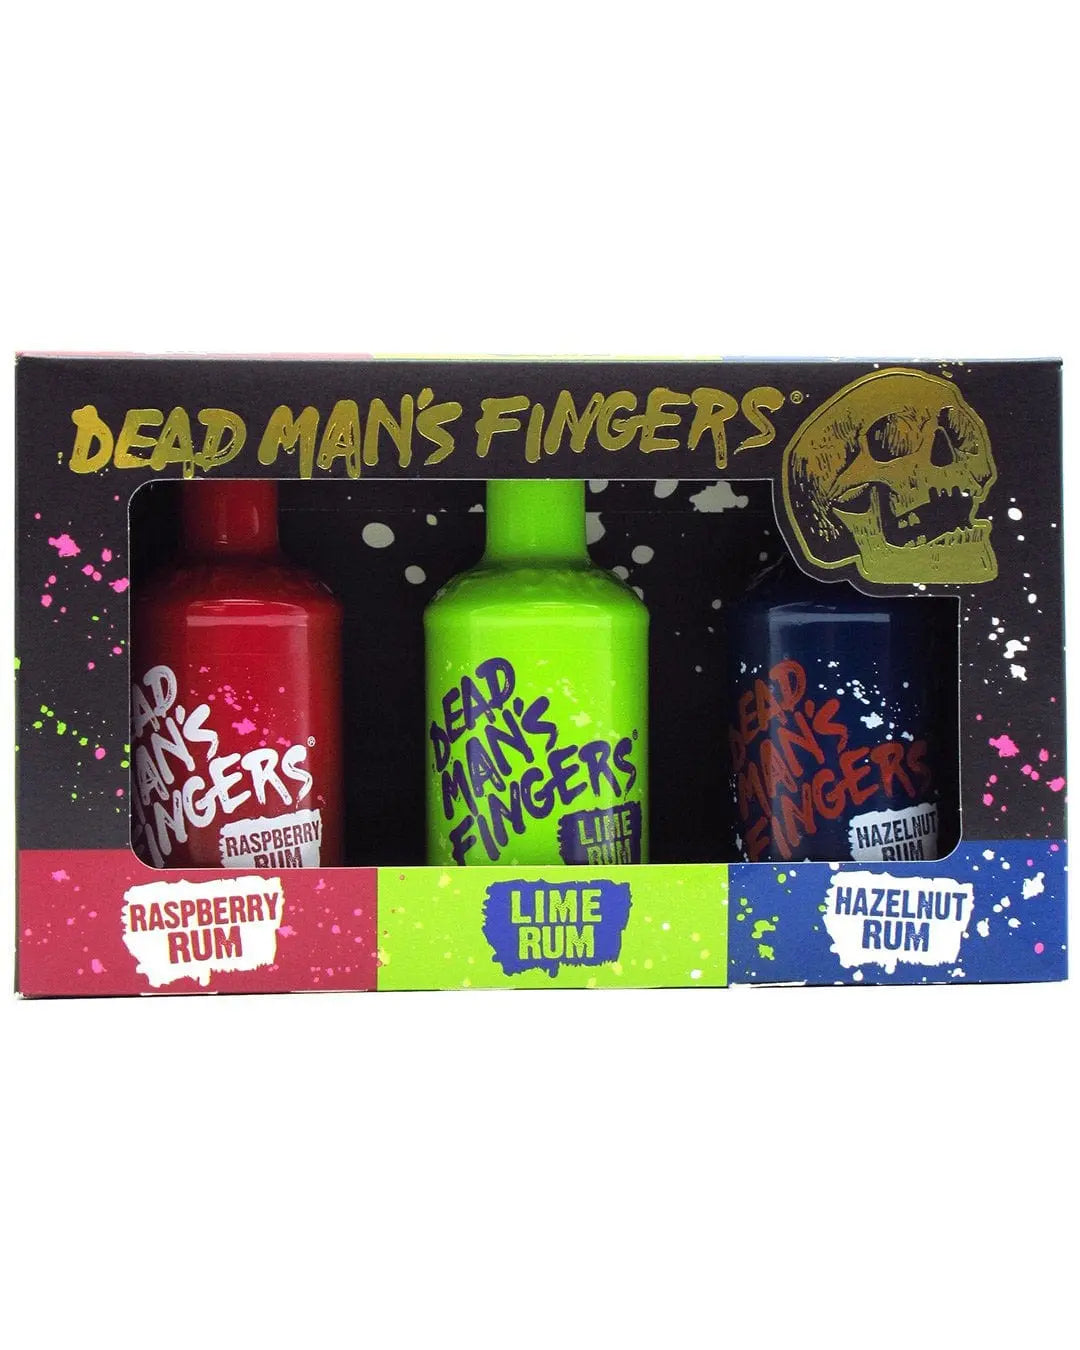 Dead Man's Fingers Rum Taster Pack (Hazelnut, Lime, Raspberry), 3 x 5 cl Spirit Miniatures